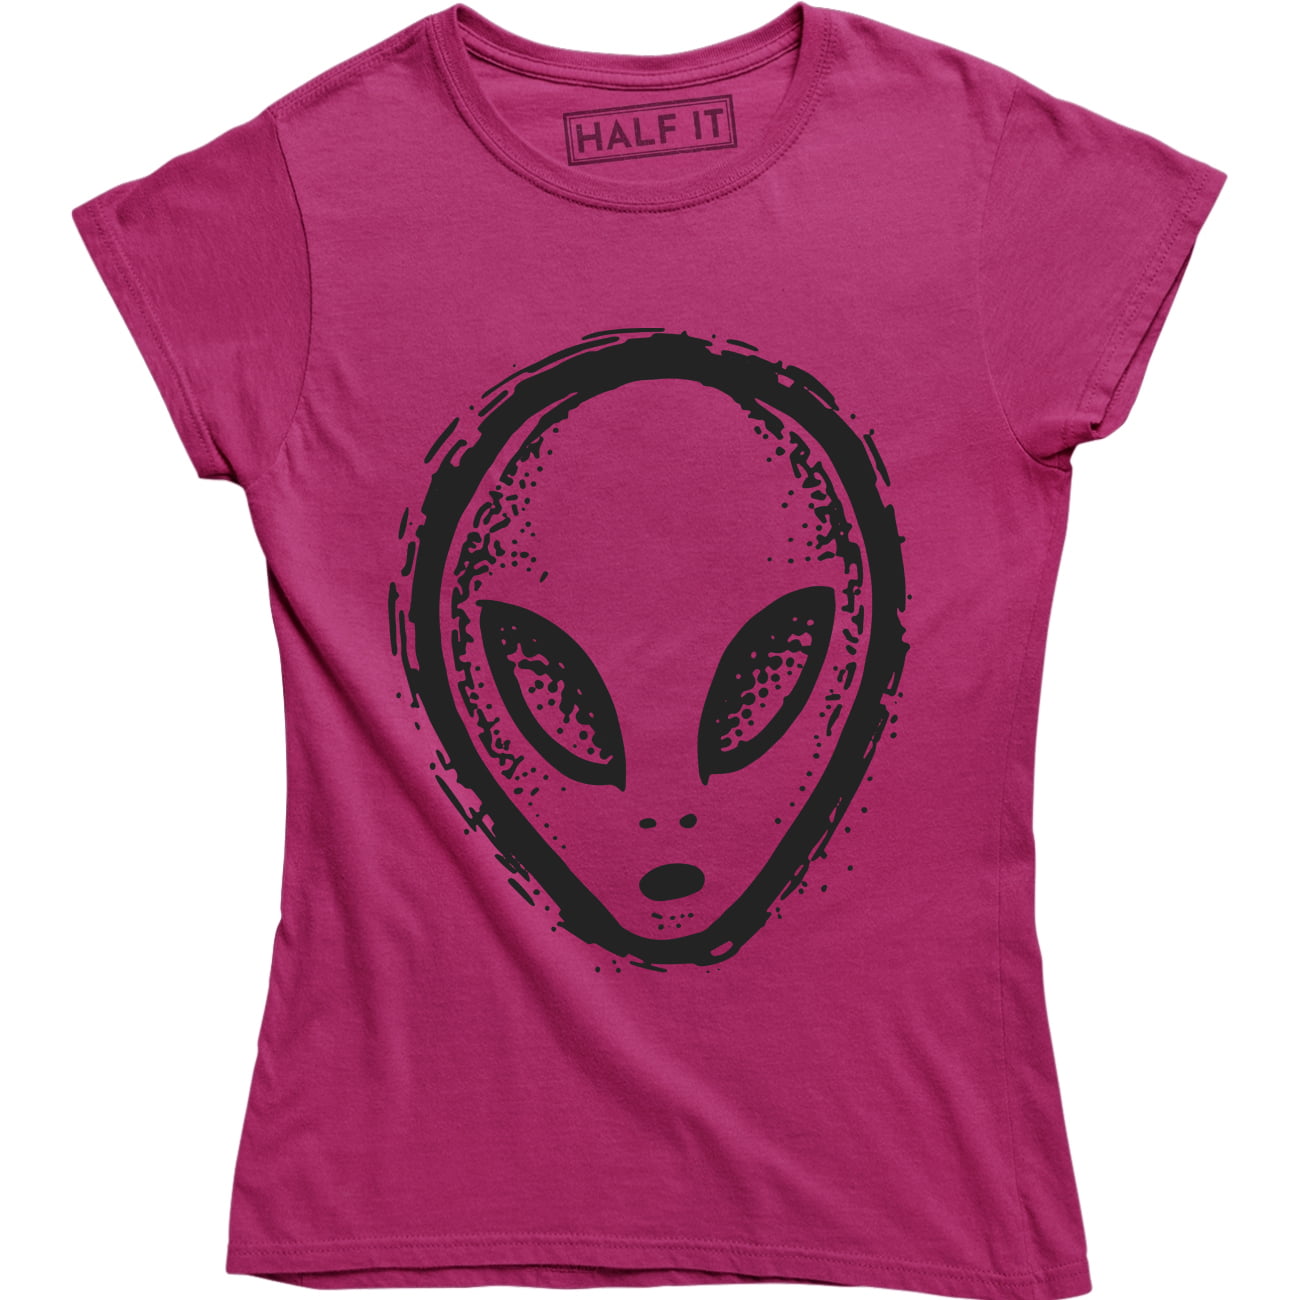 UFO shirt tshirt t shirt tee Alien Graphic Design shirt Space Galaxy Funny Area 51 I Want to Believe Illustration Unisex shirt Gift idea